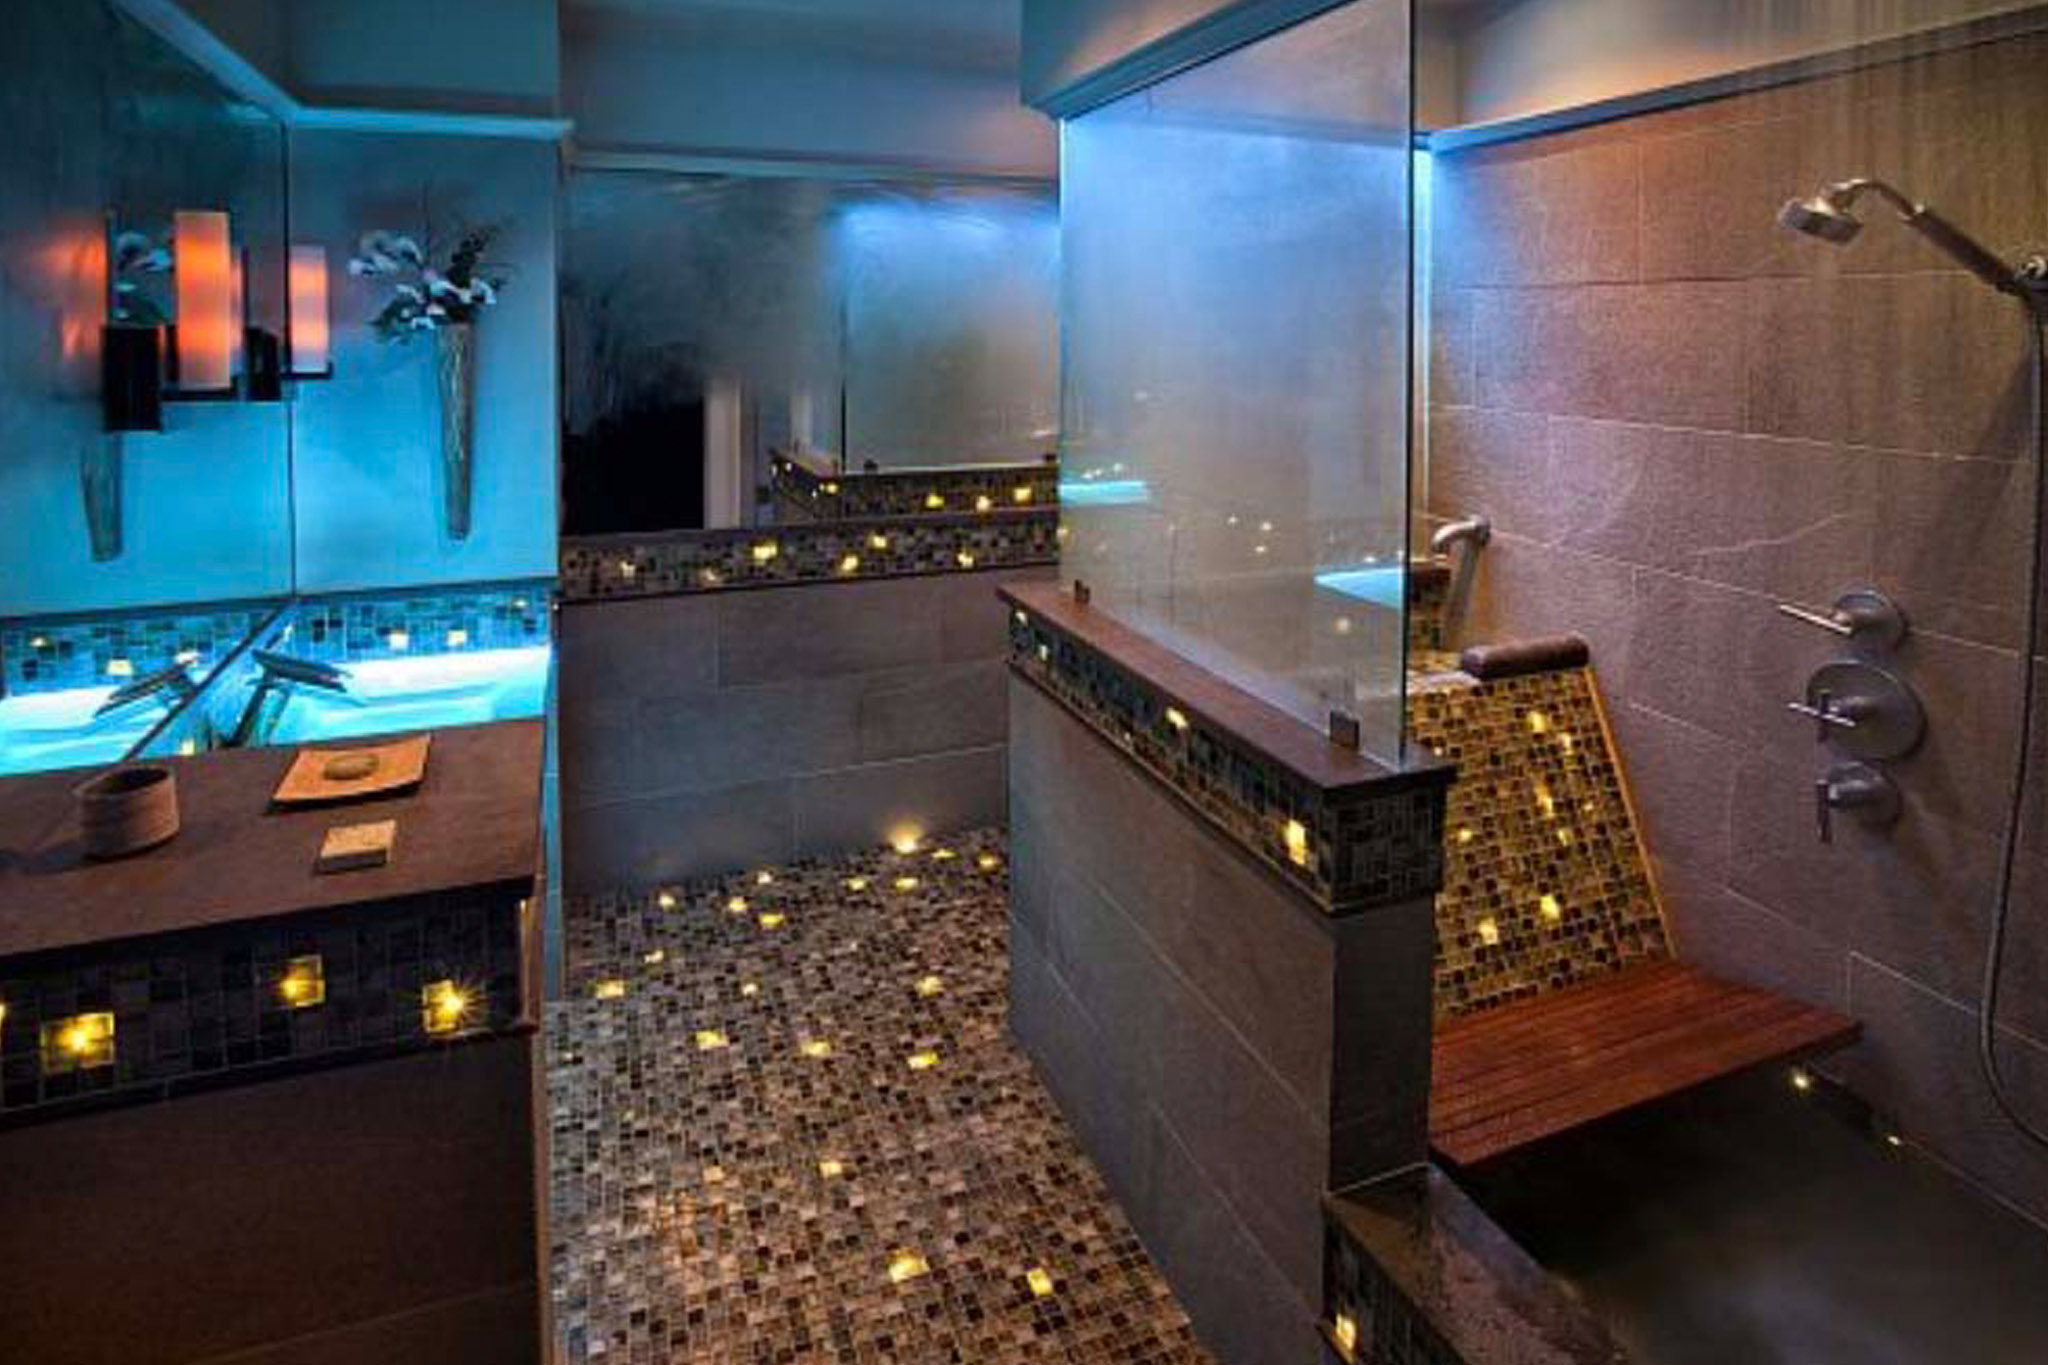 A luxurious bath with colorful fiber optic lighting, blue-lit glass sink, a roman bath and a rain head shower.